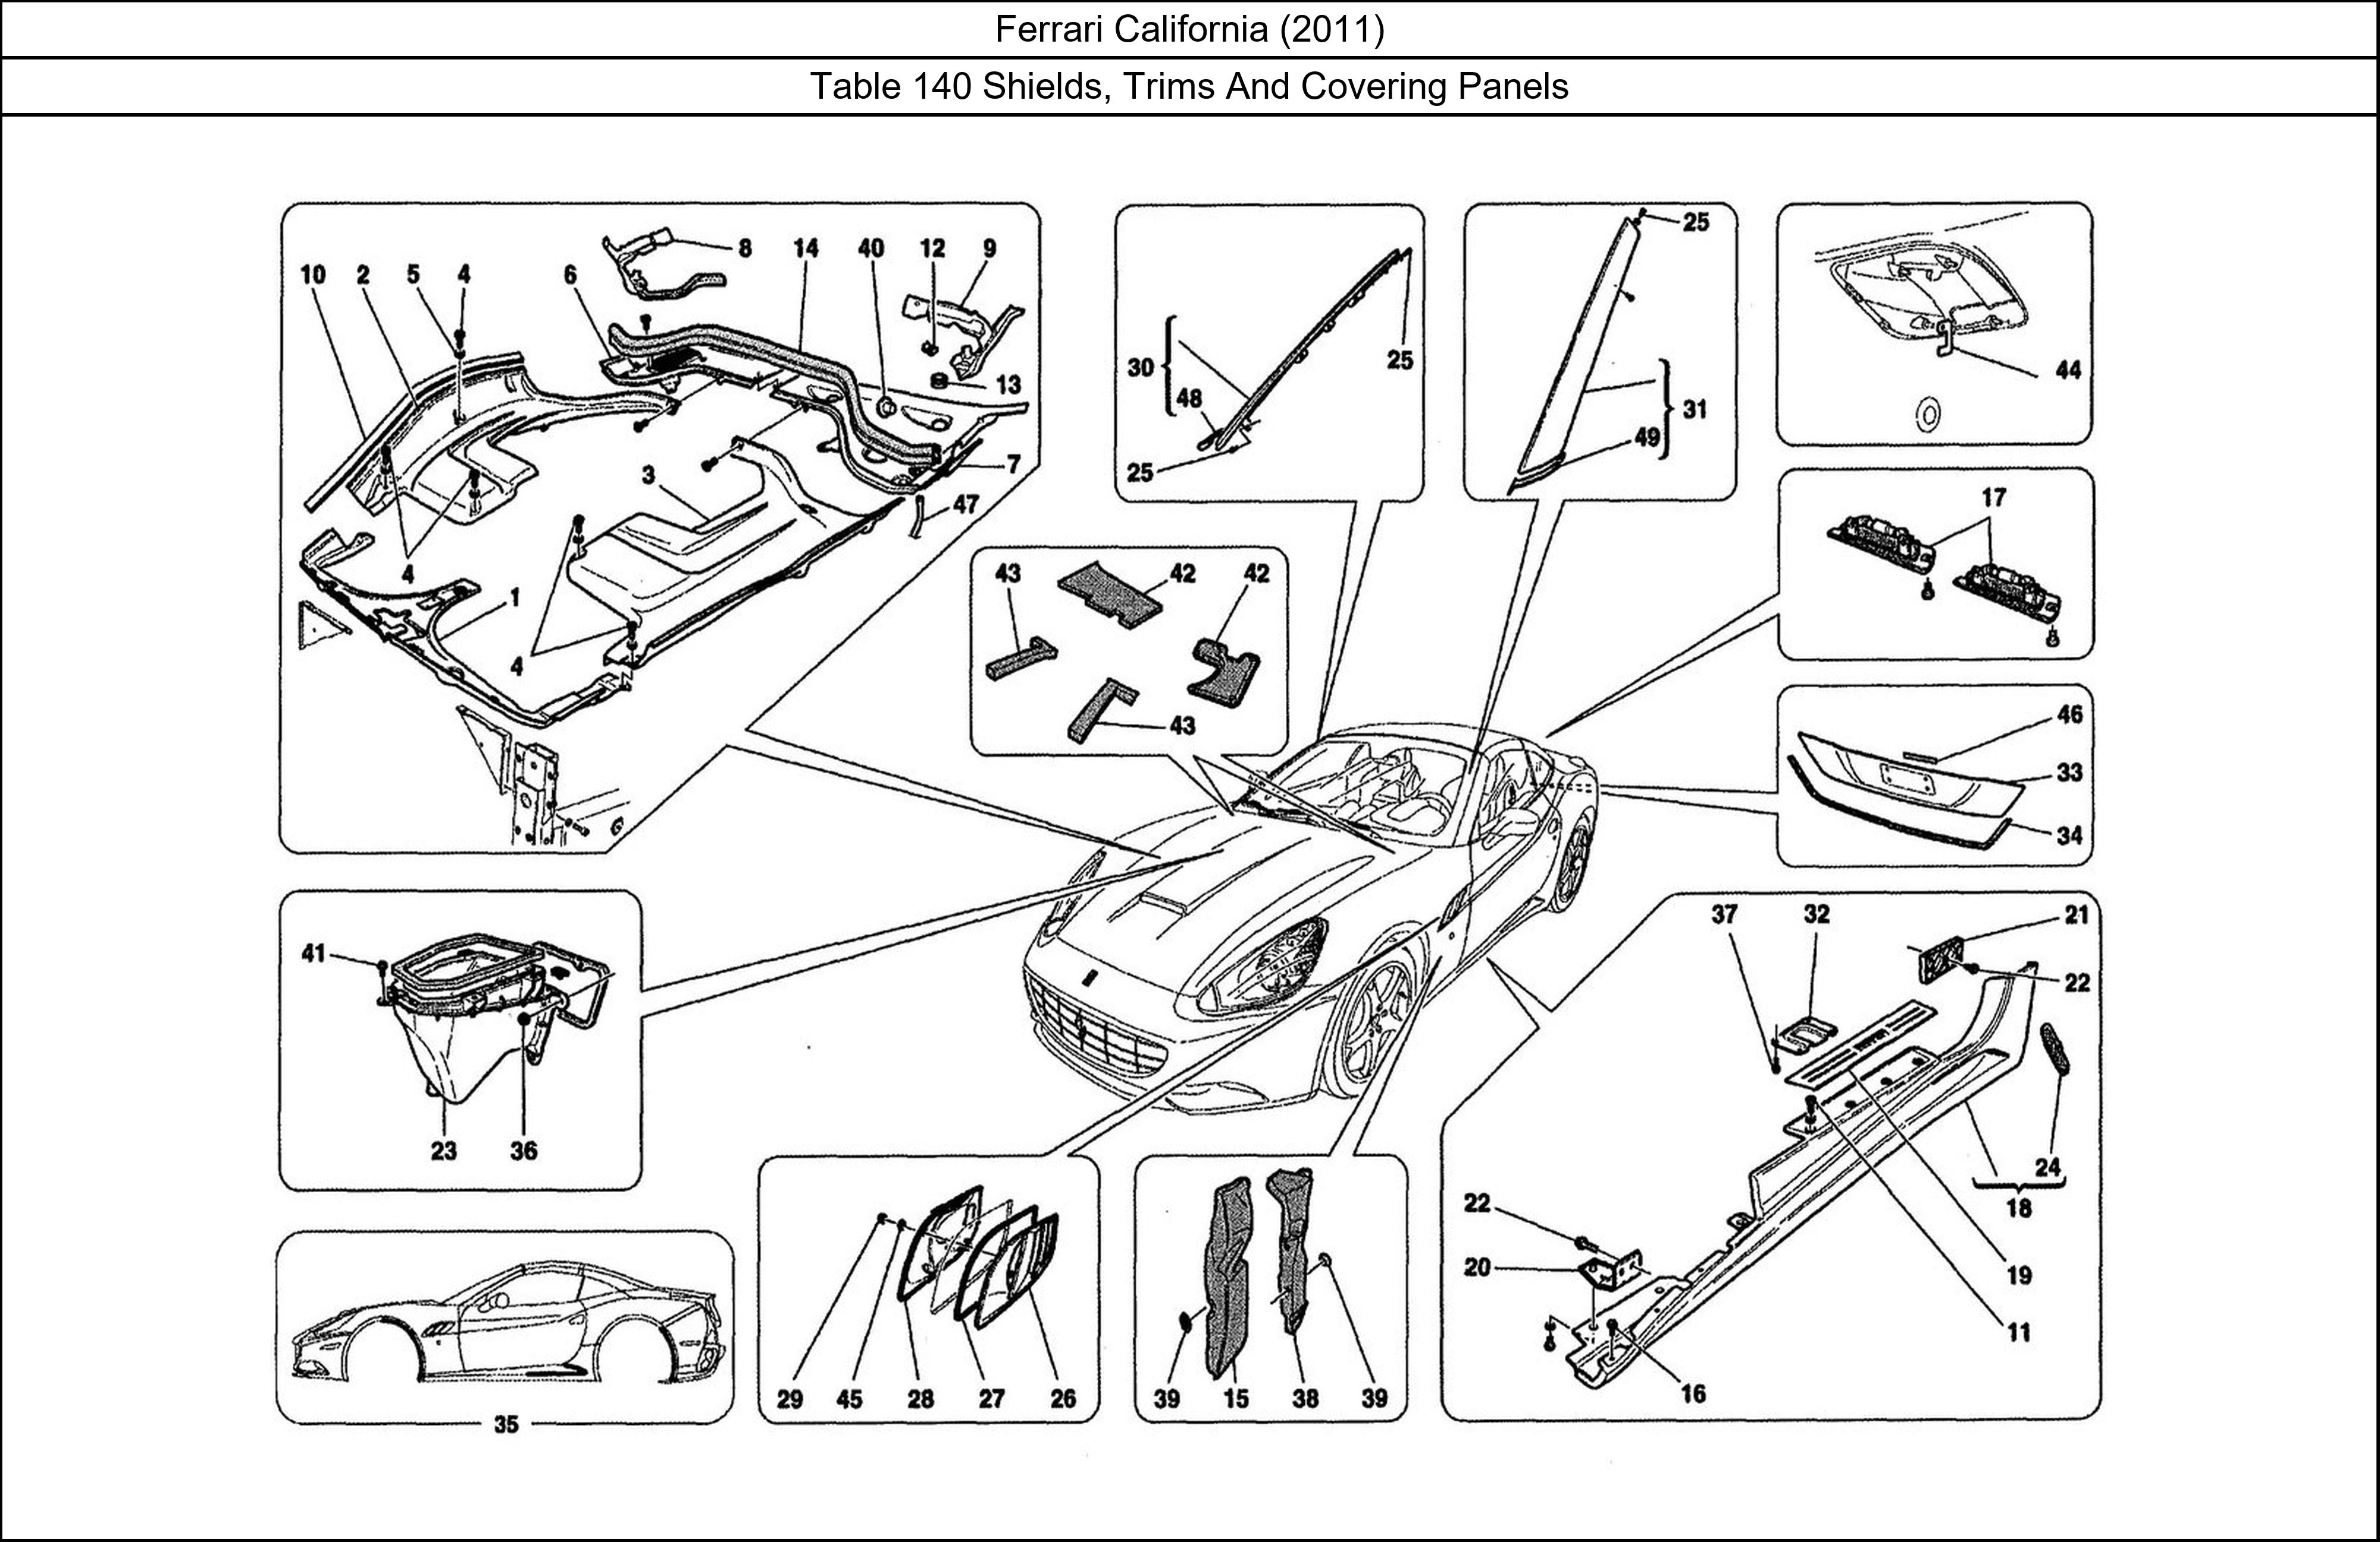 Ferrari Parts Ferrari California (2011) Table 140 Shields, Trims And Covering Panels